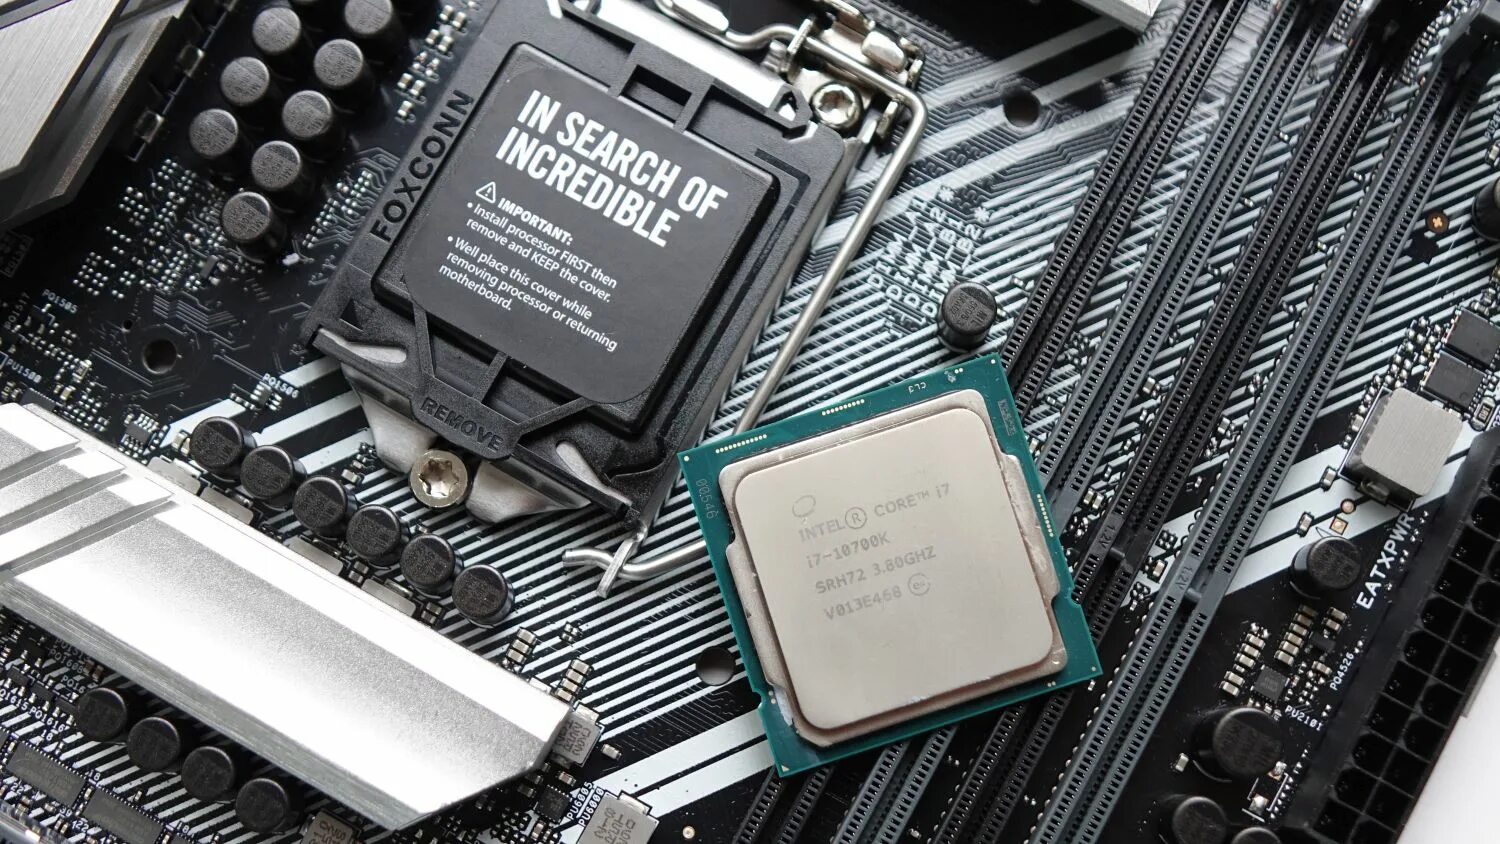 7 12700. I7 10700k. Core i7 10700kf. Процессор Intel Core i7-10700k. CPU Intel Core i7-10700.